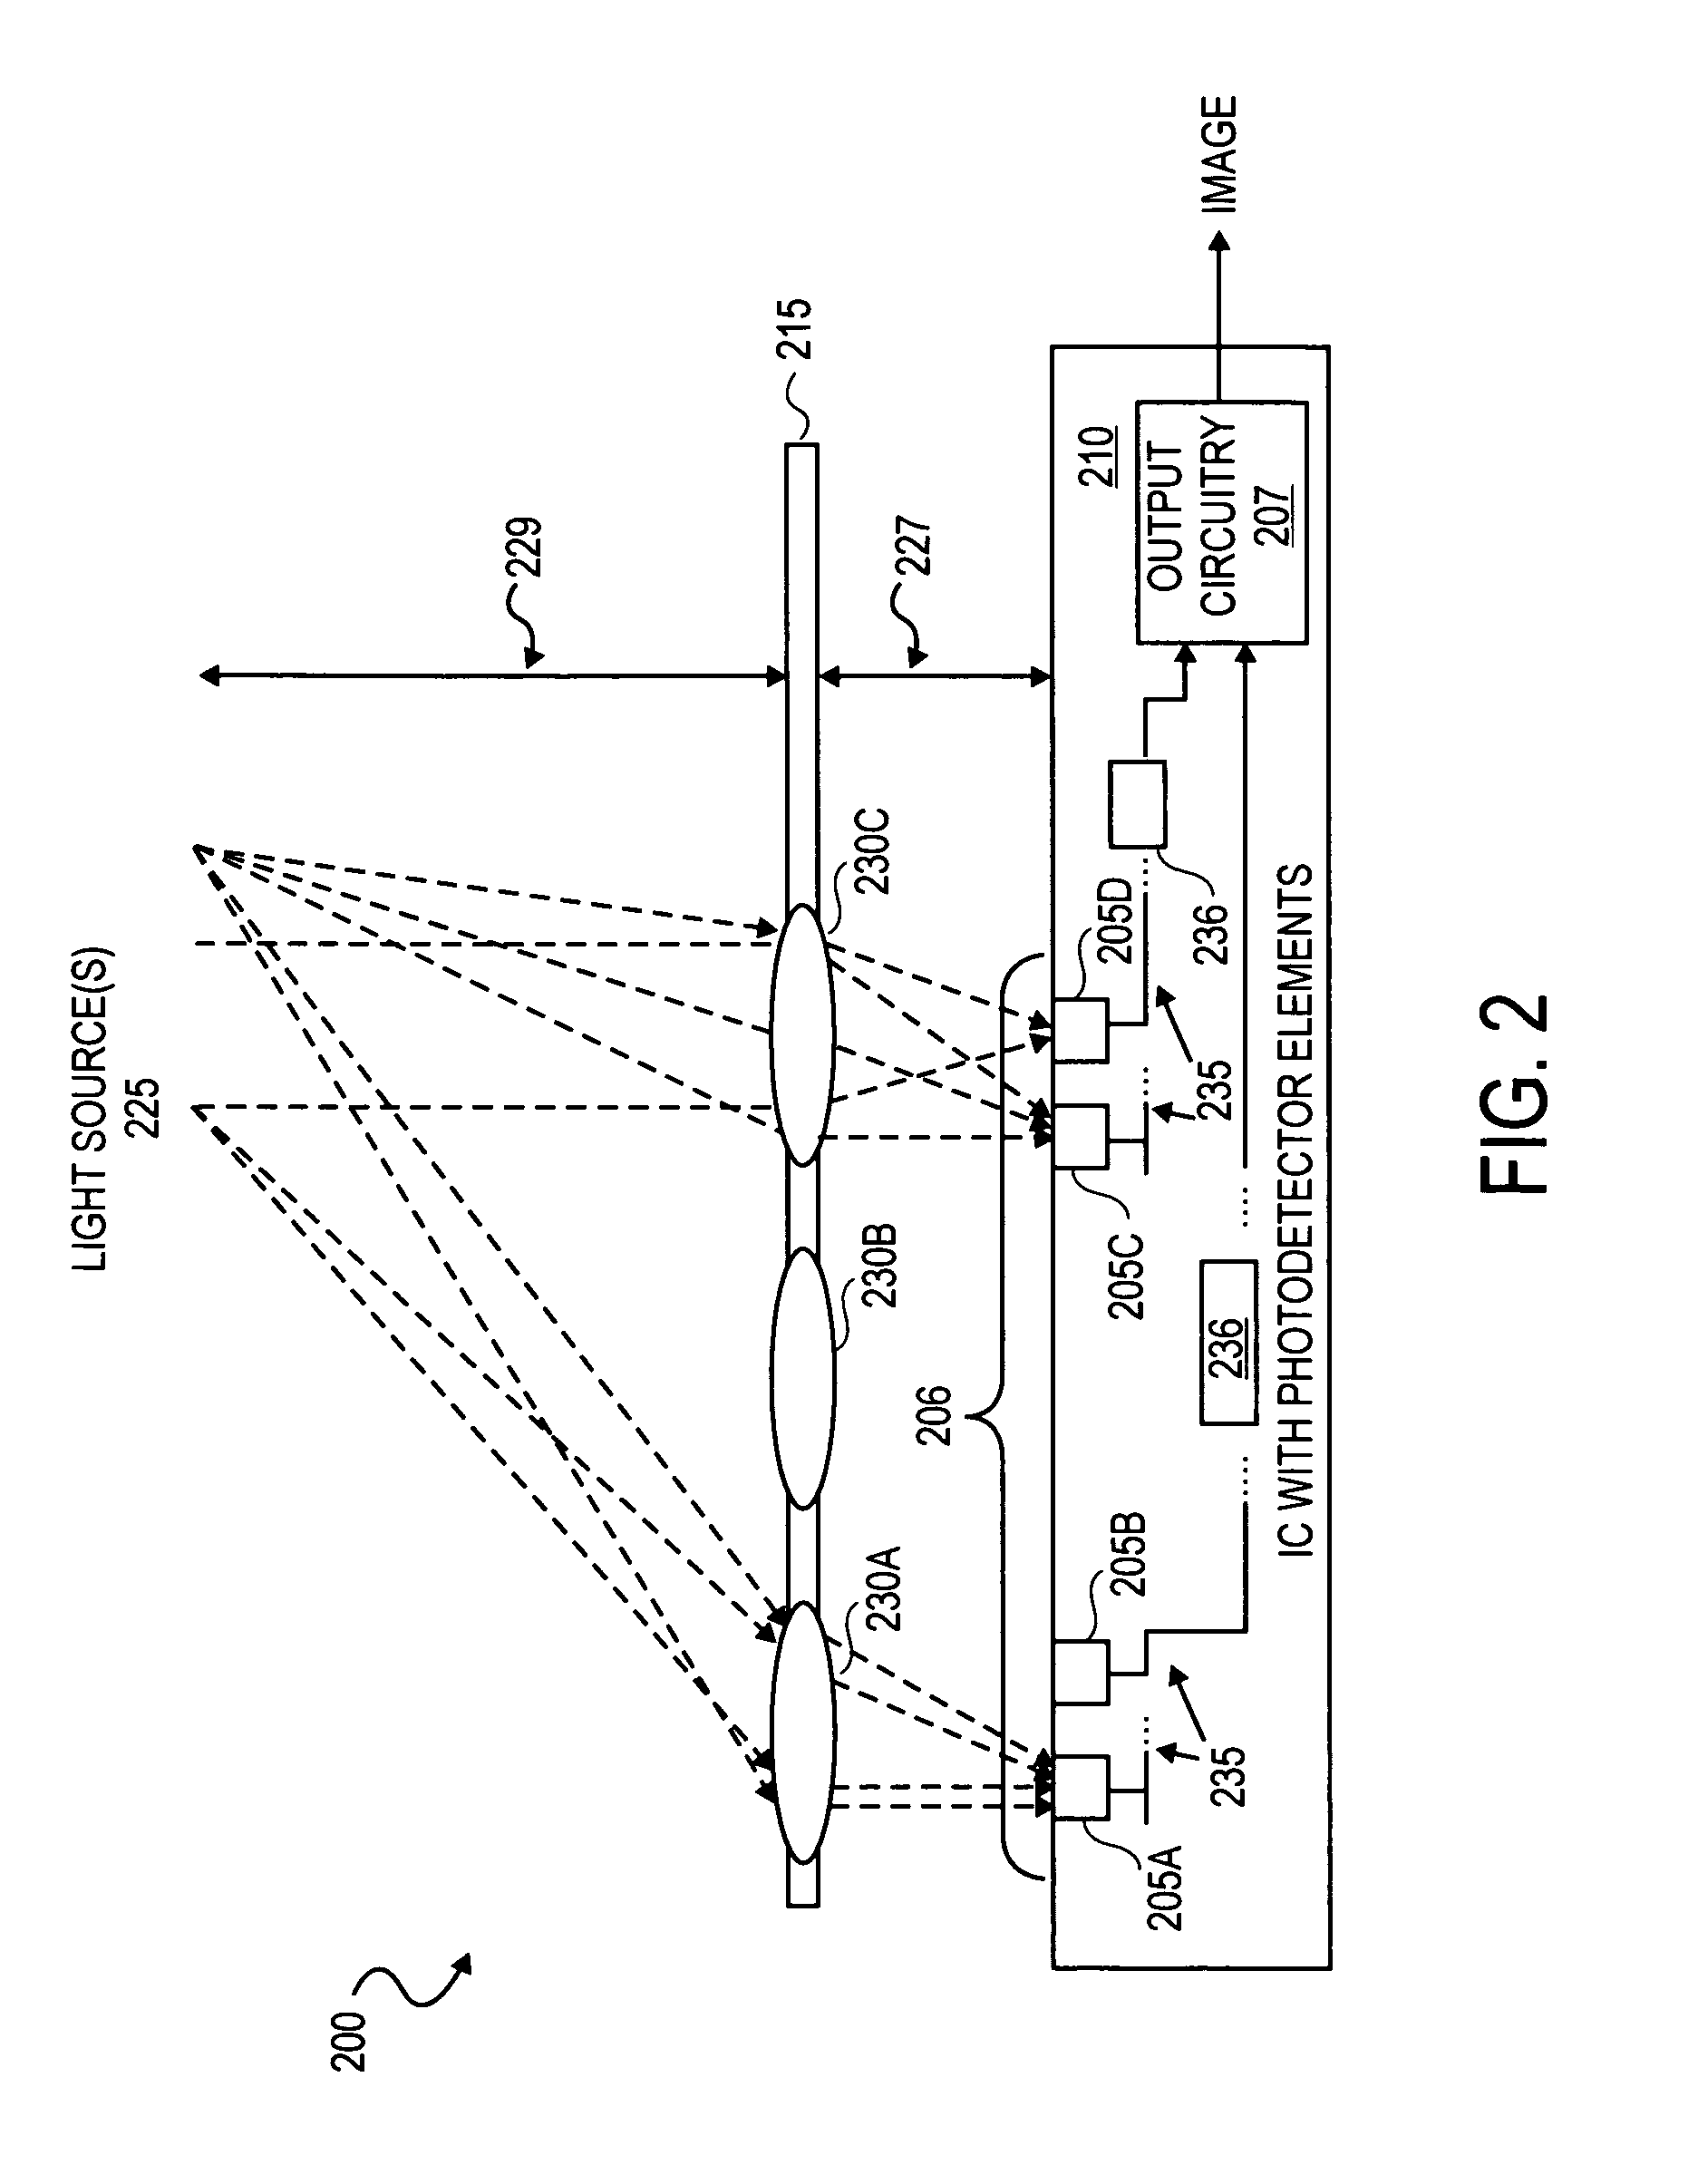 Integrated circuit-based compound eye image sensor using a light pipe bundle